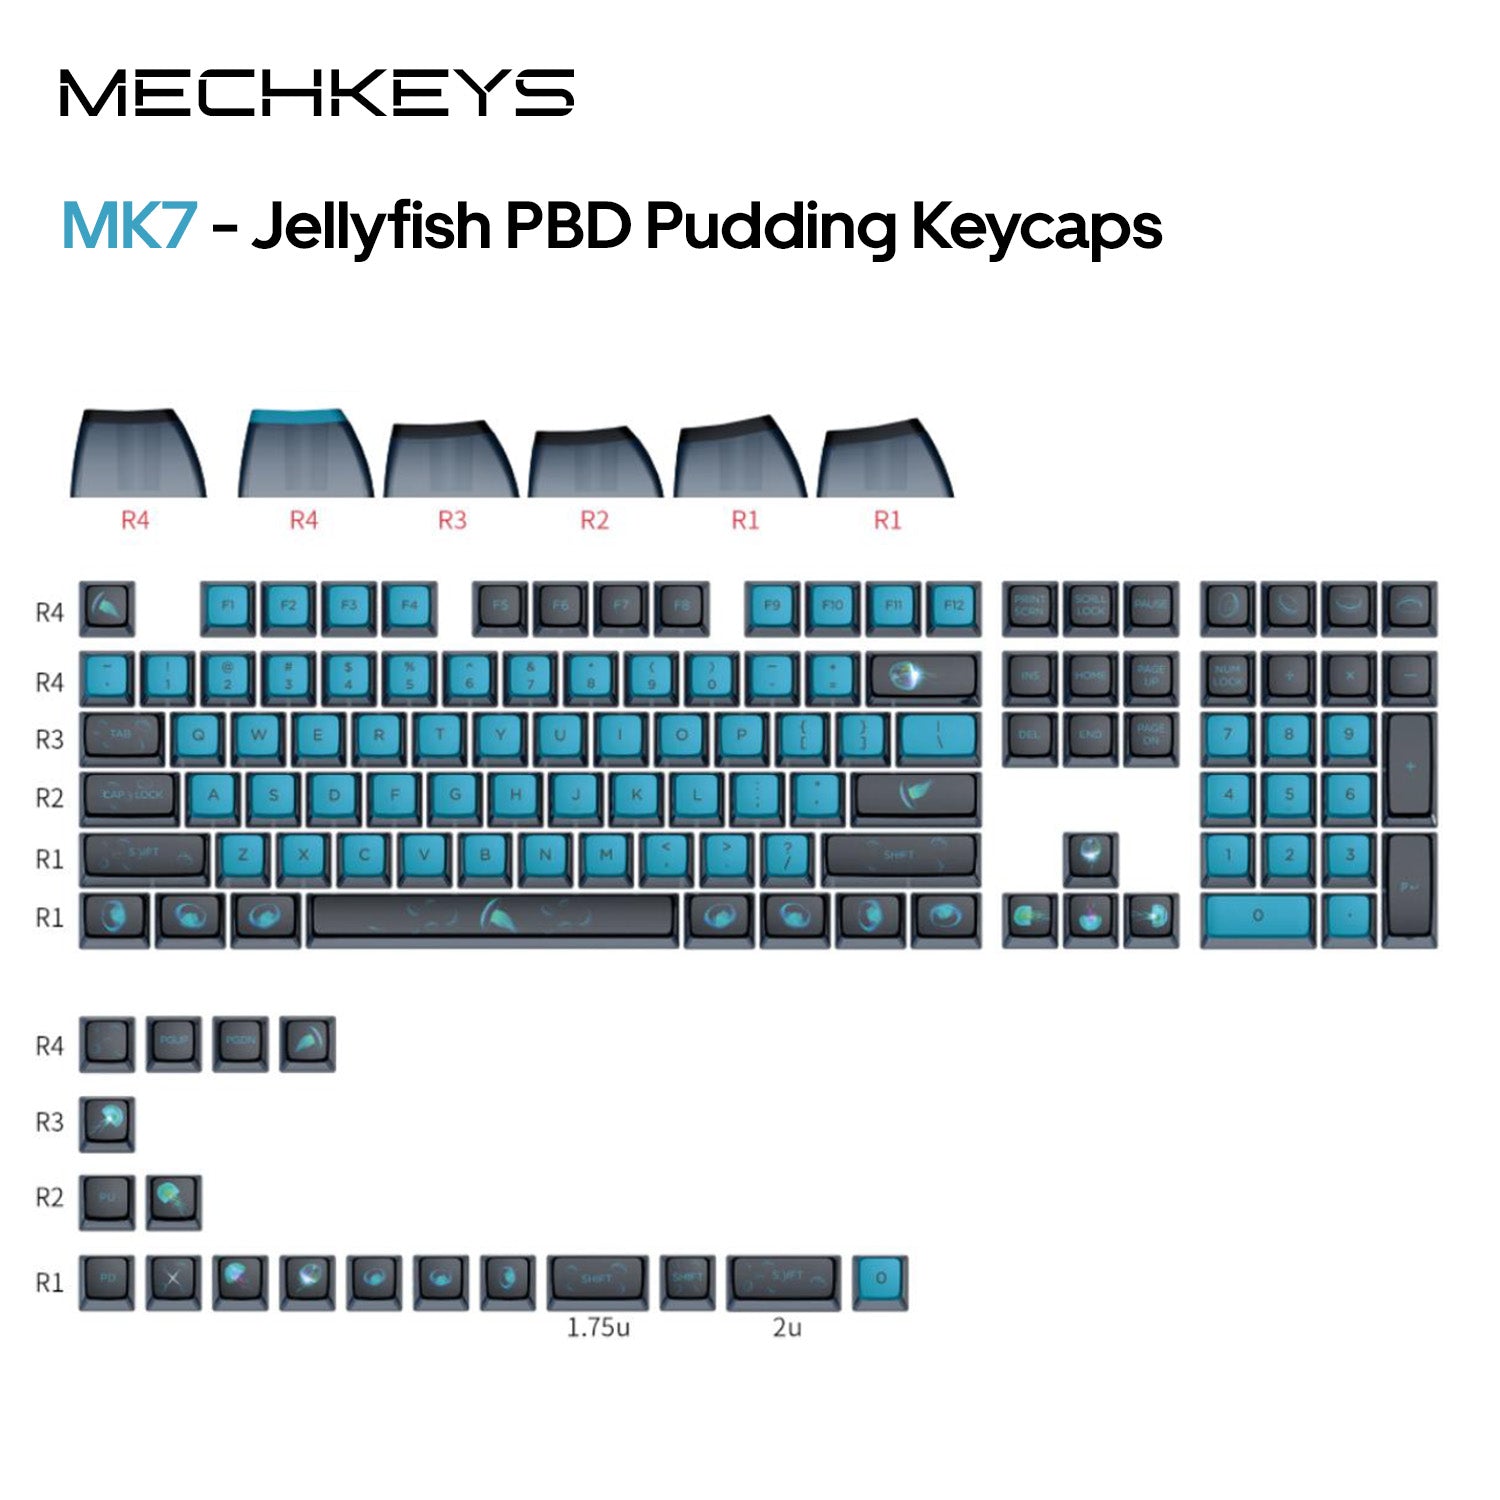 OVERCLOCK MECHKEYS Jellyfish PBT Pudding Keycaps